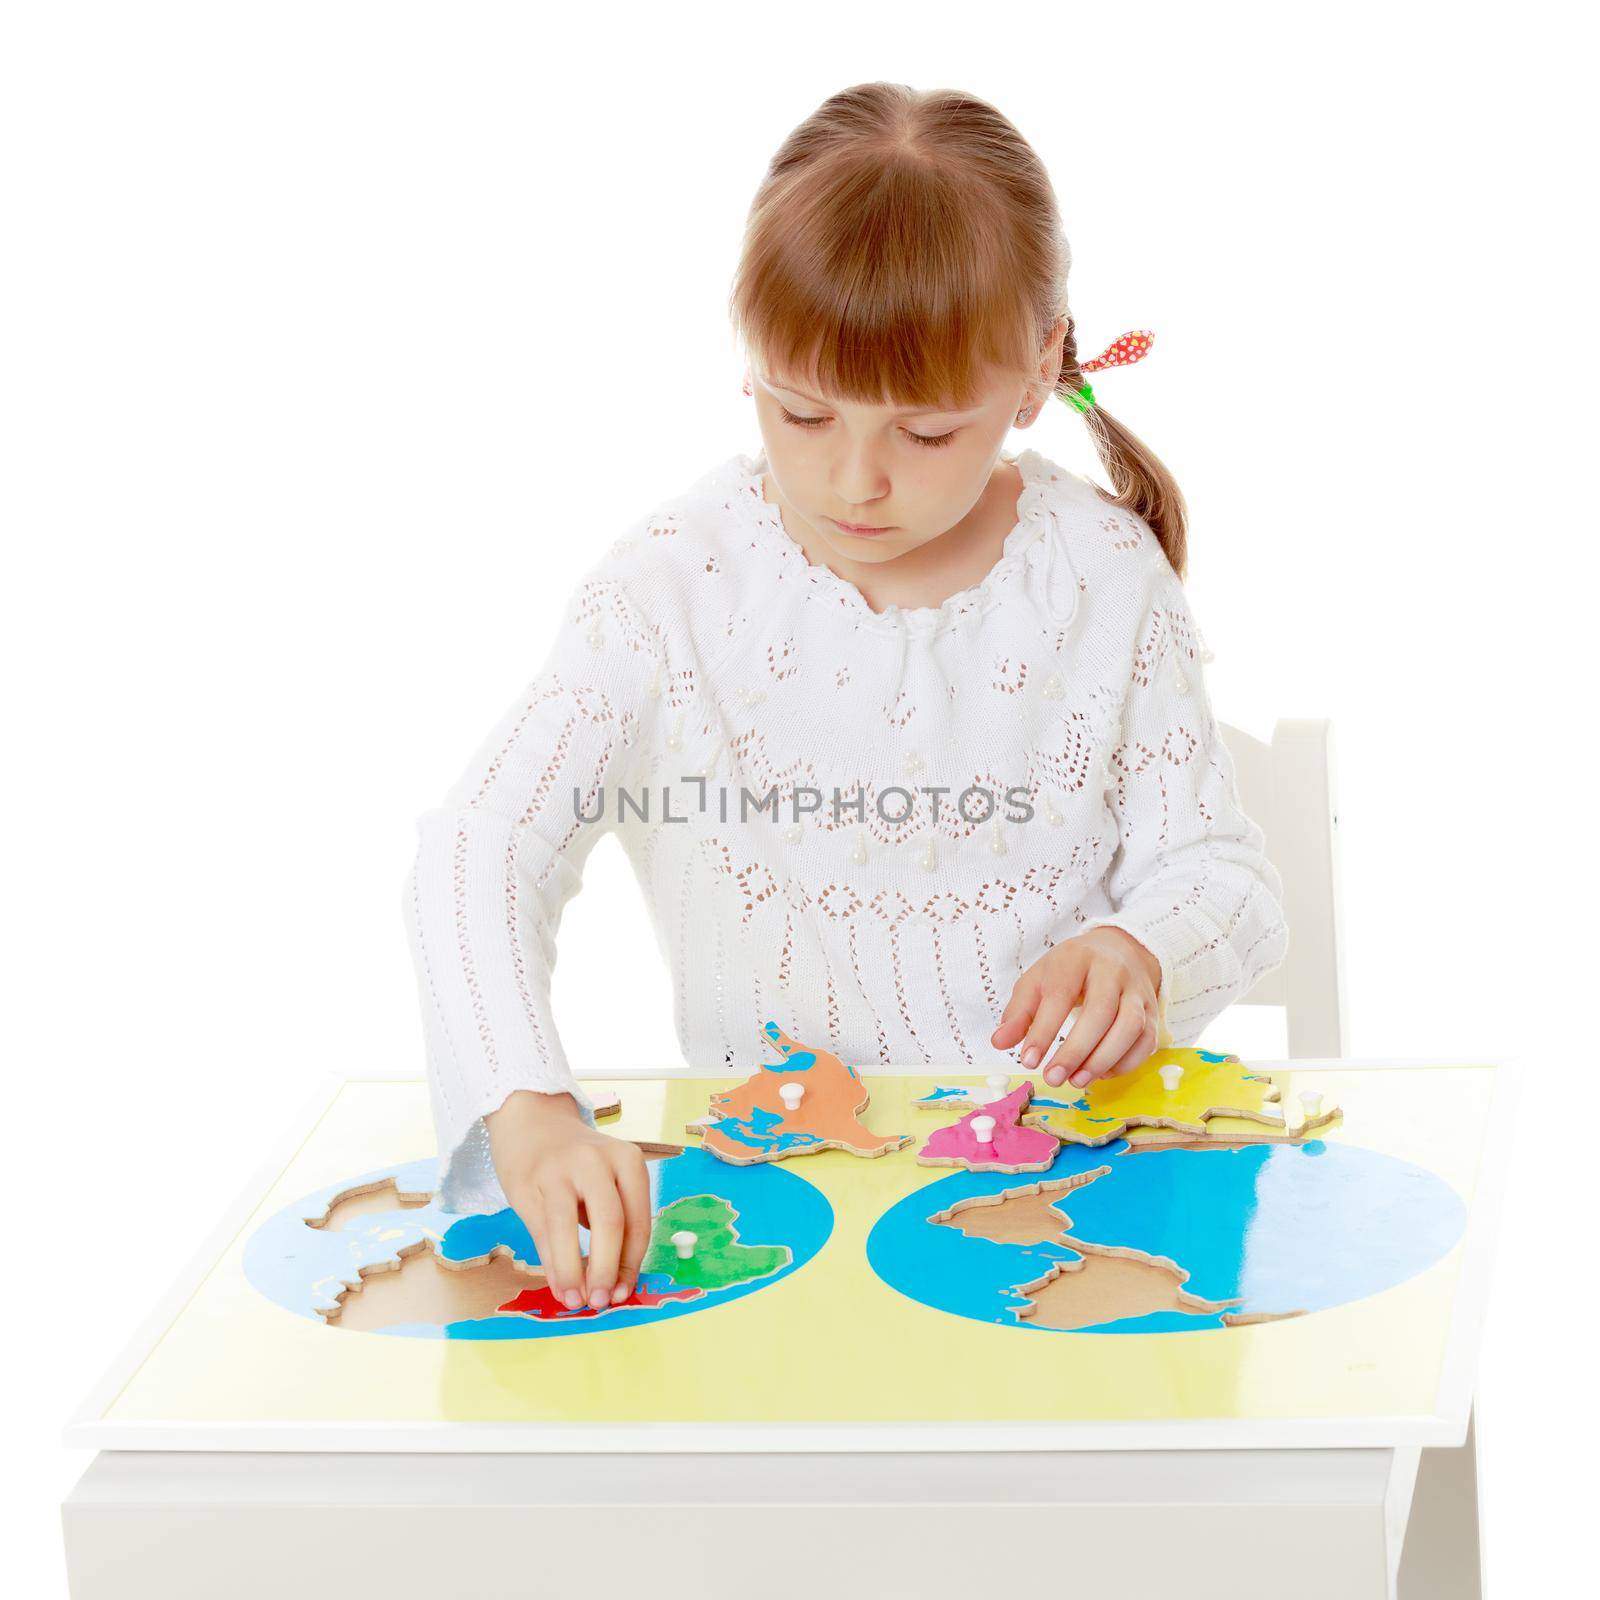 A little girl is studying Montessori stuff. by kolesnikov_studio